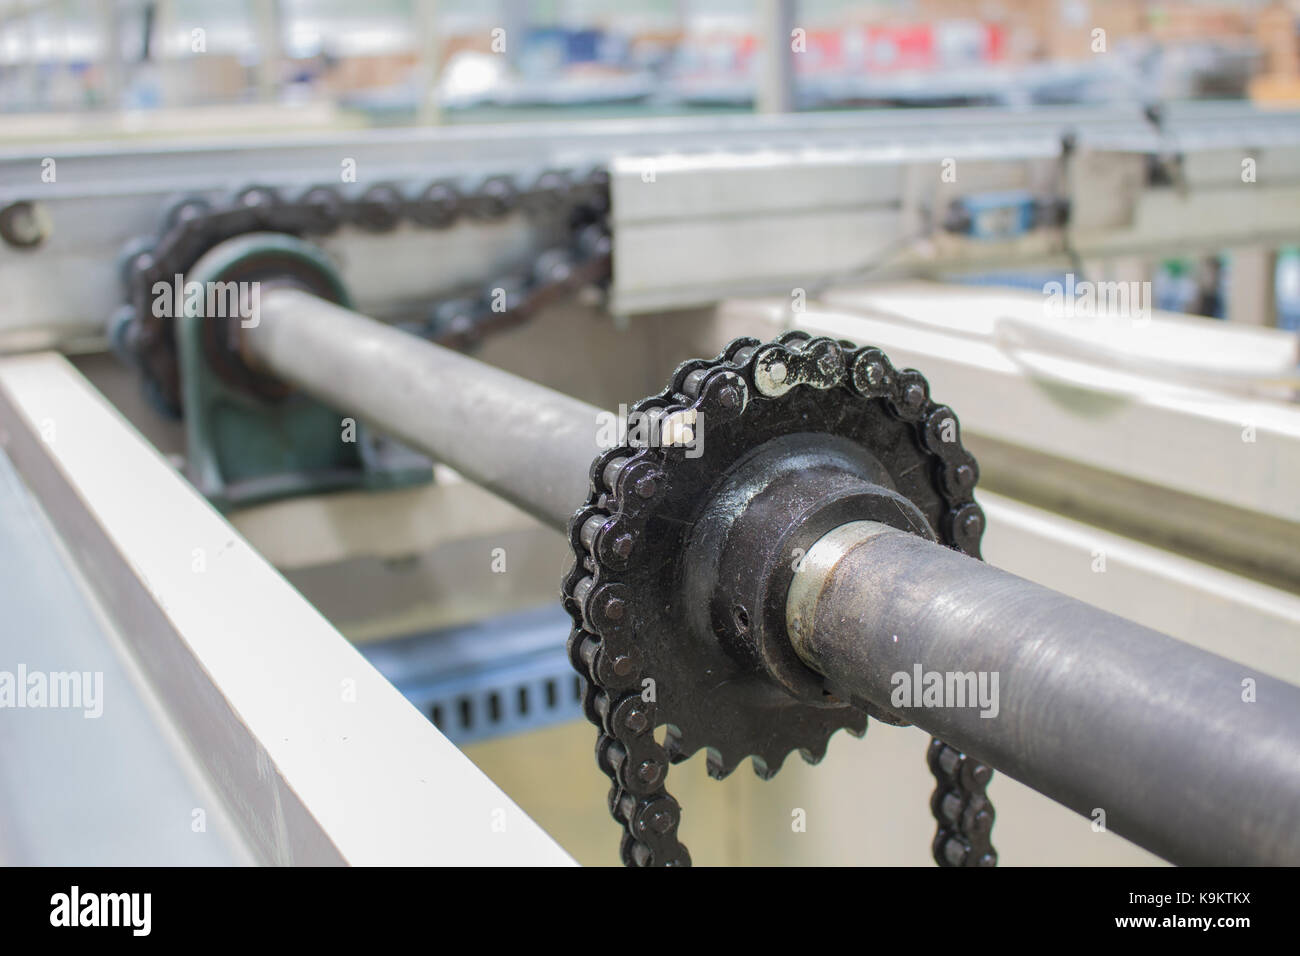 the chain drive shaft Line Conveyor Industrial Stock Photo